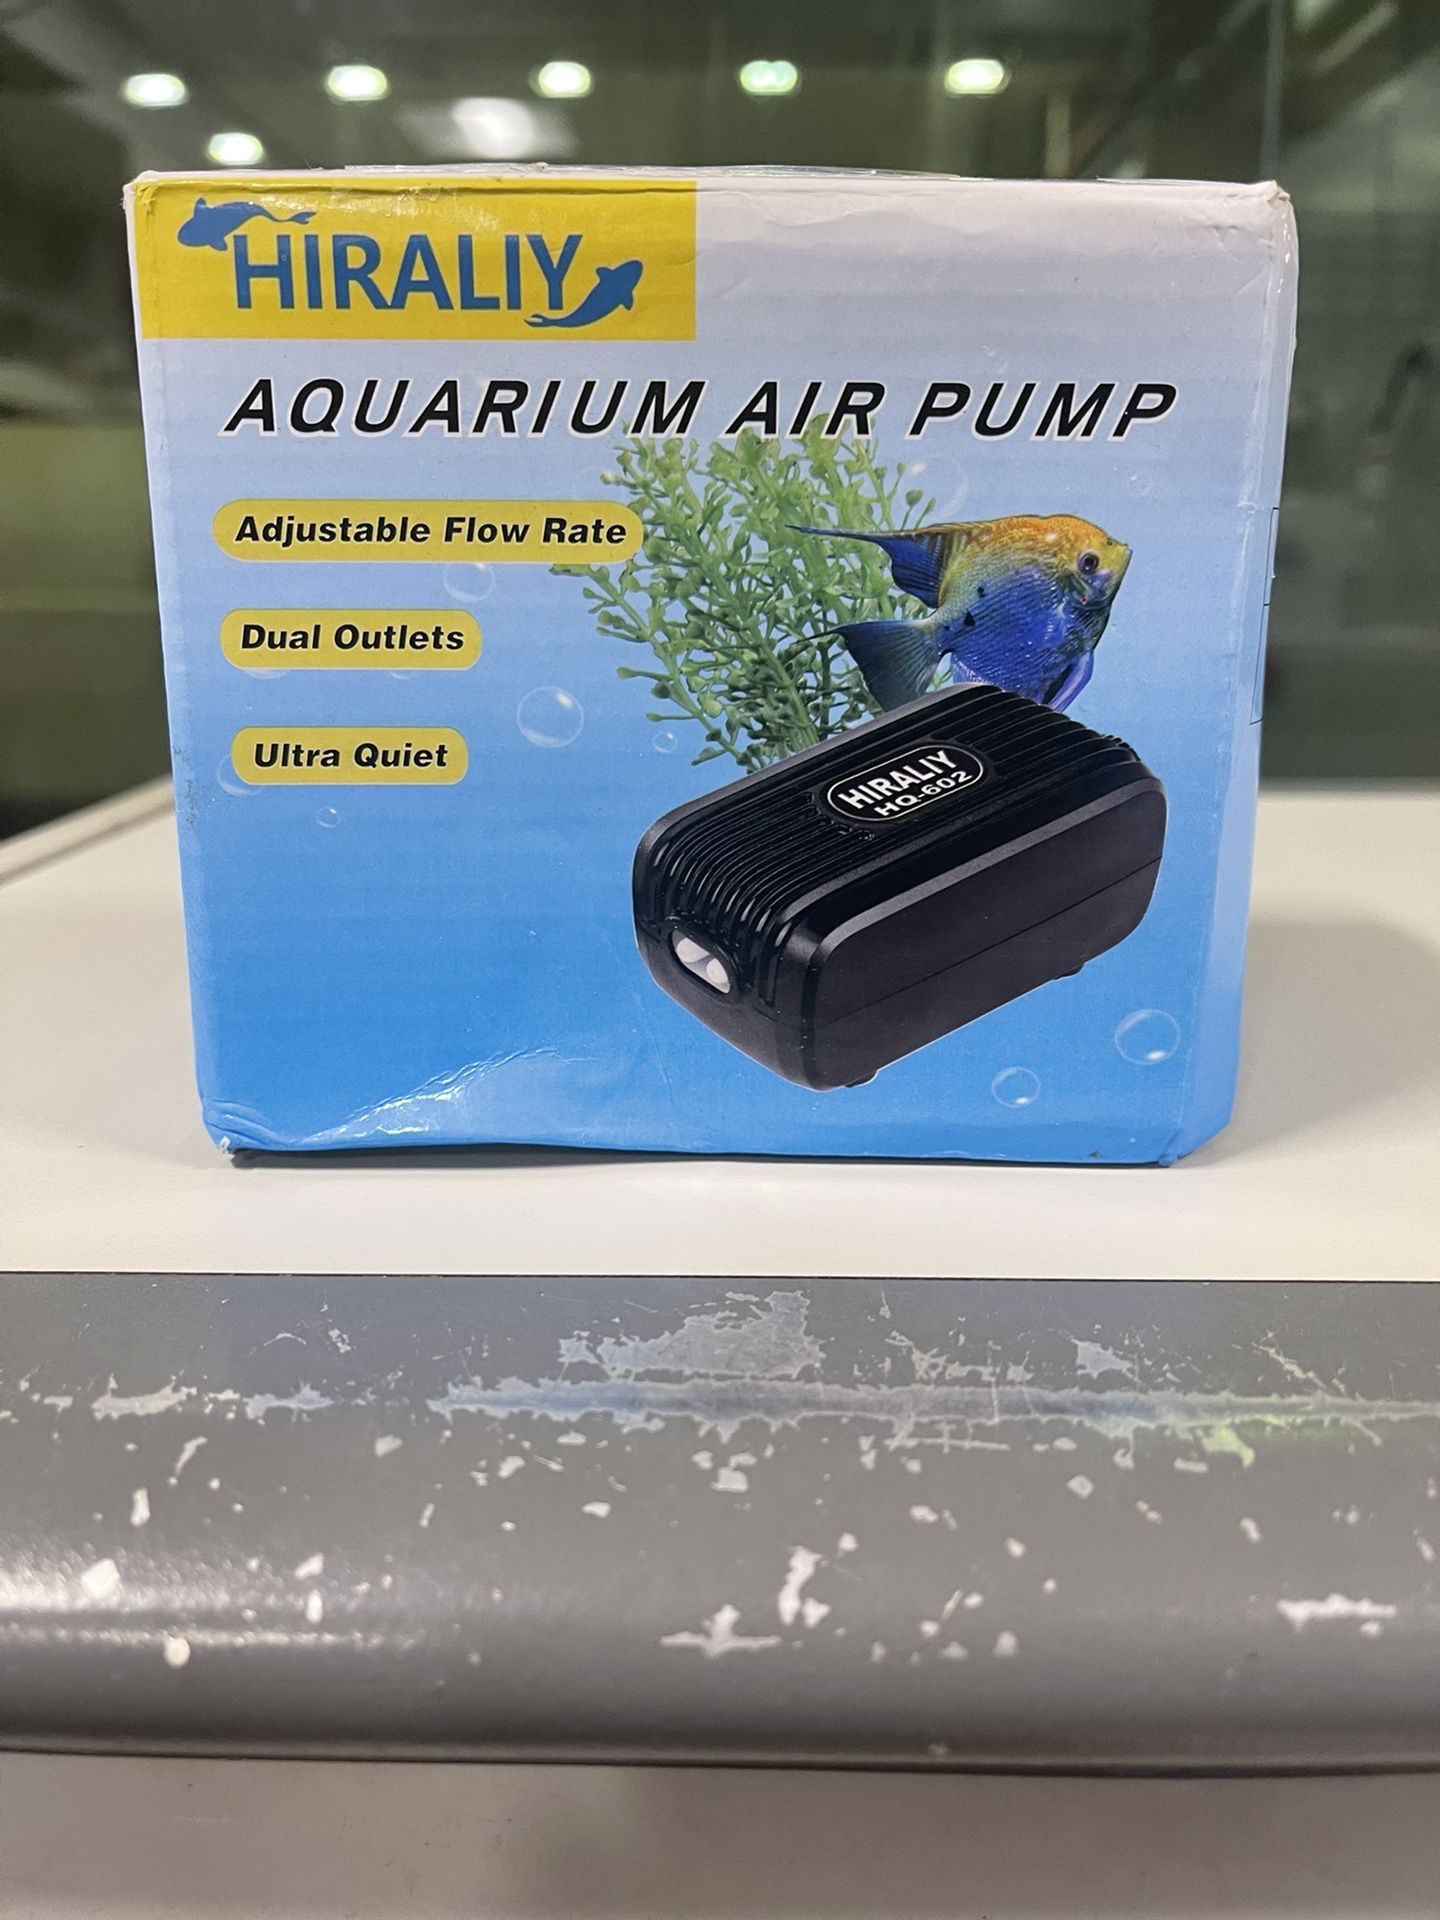  Aquarium Air Pump